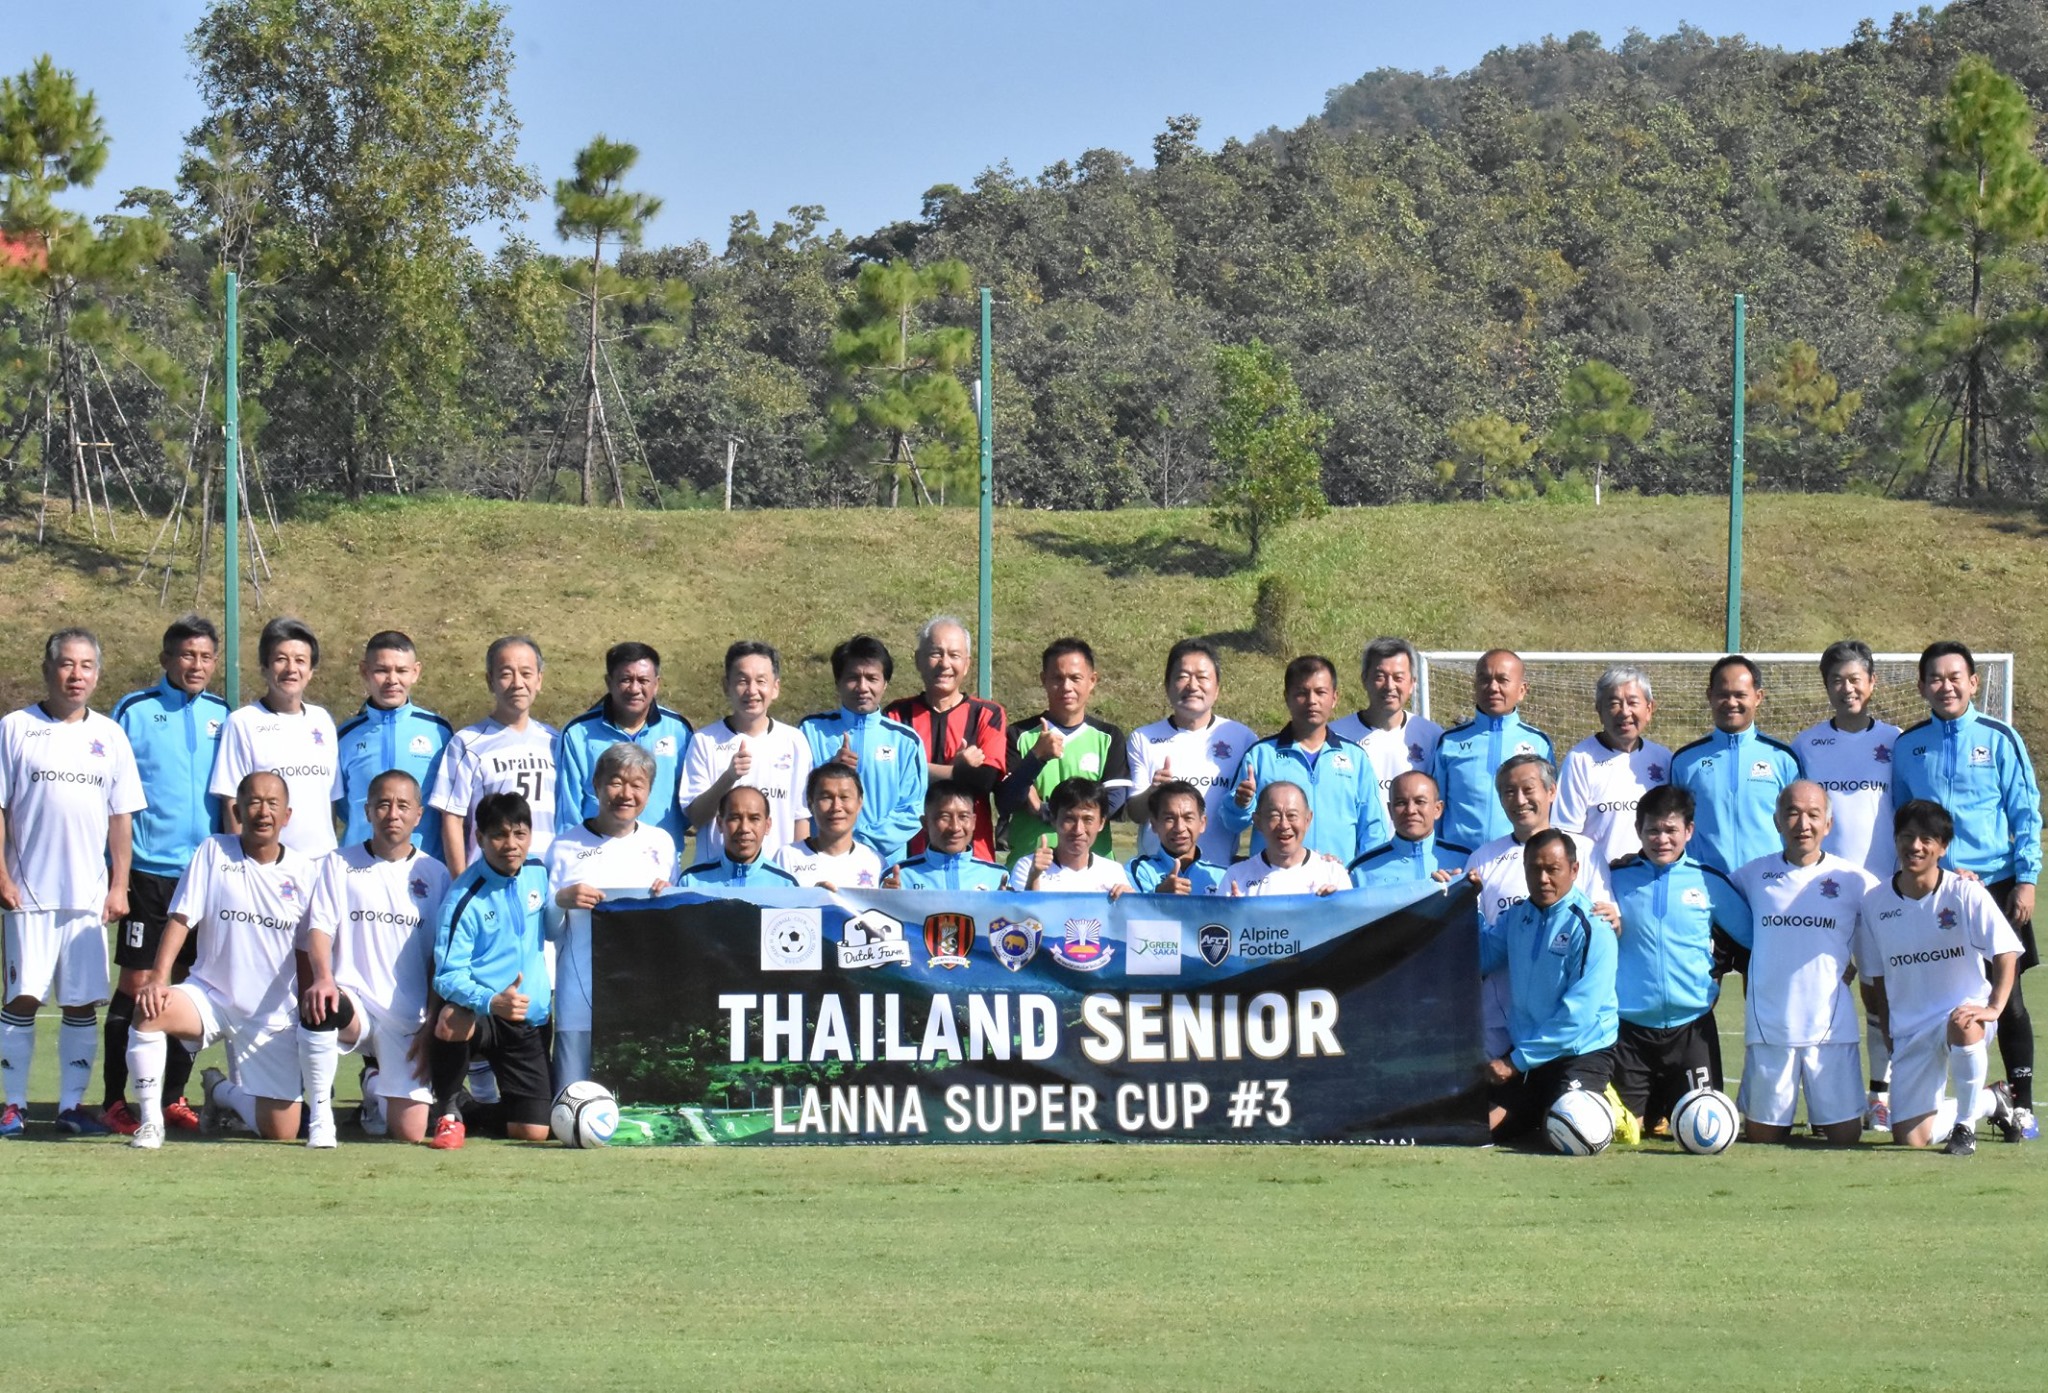 Thailand Senior Lanna Super Cup #3